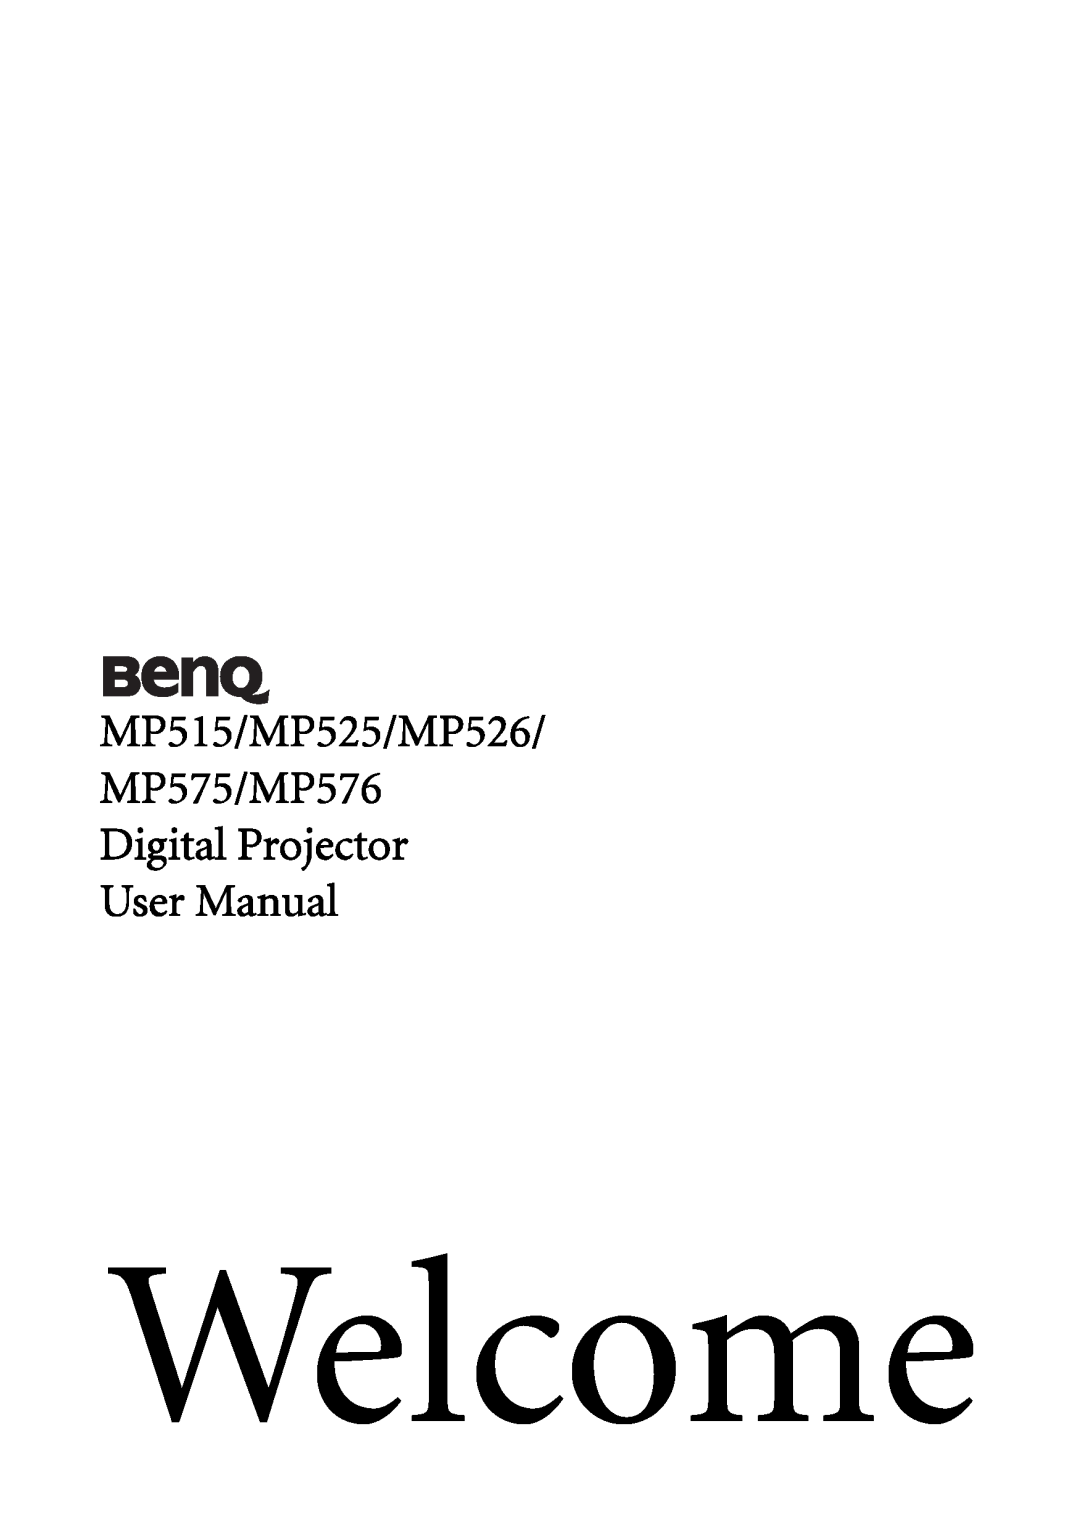 BenQ manual MP515/MP525/MP526 MP575/MP576 Digital Projector User Manual, Welcome 